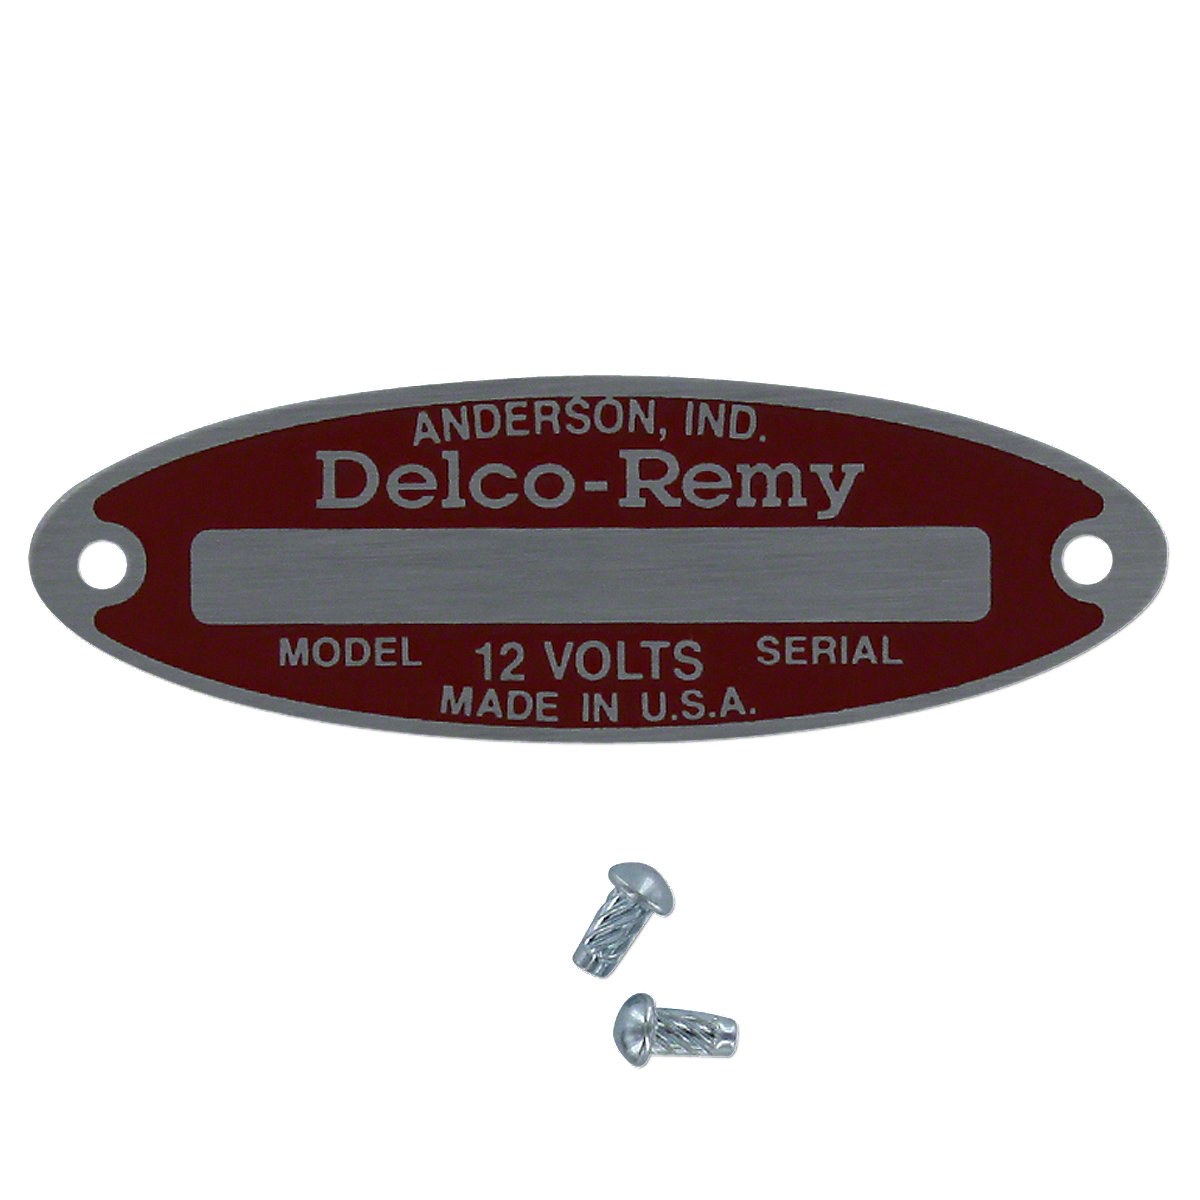 Red 12 Volt Delco Starter Tag For Oliver Tractors Using A 12 Volt Delco Starter.